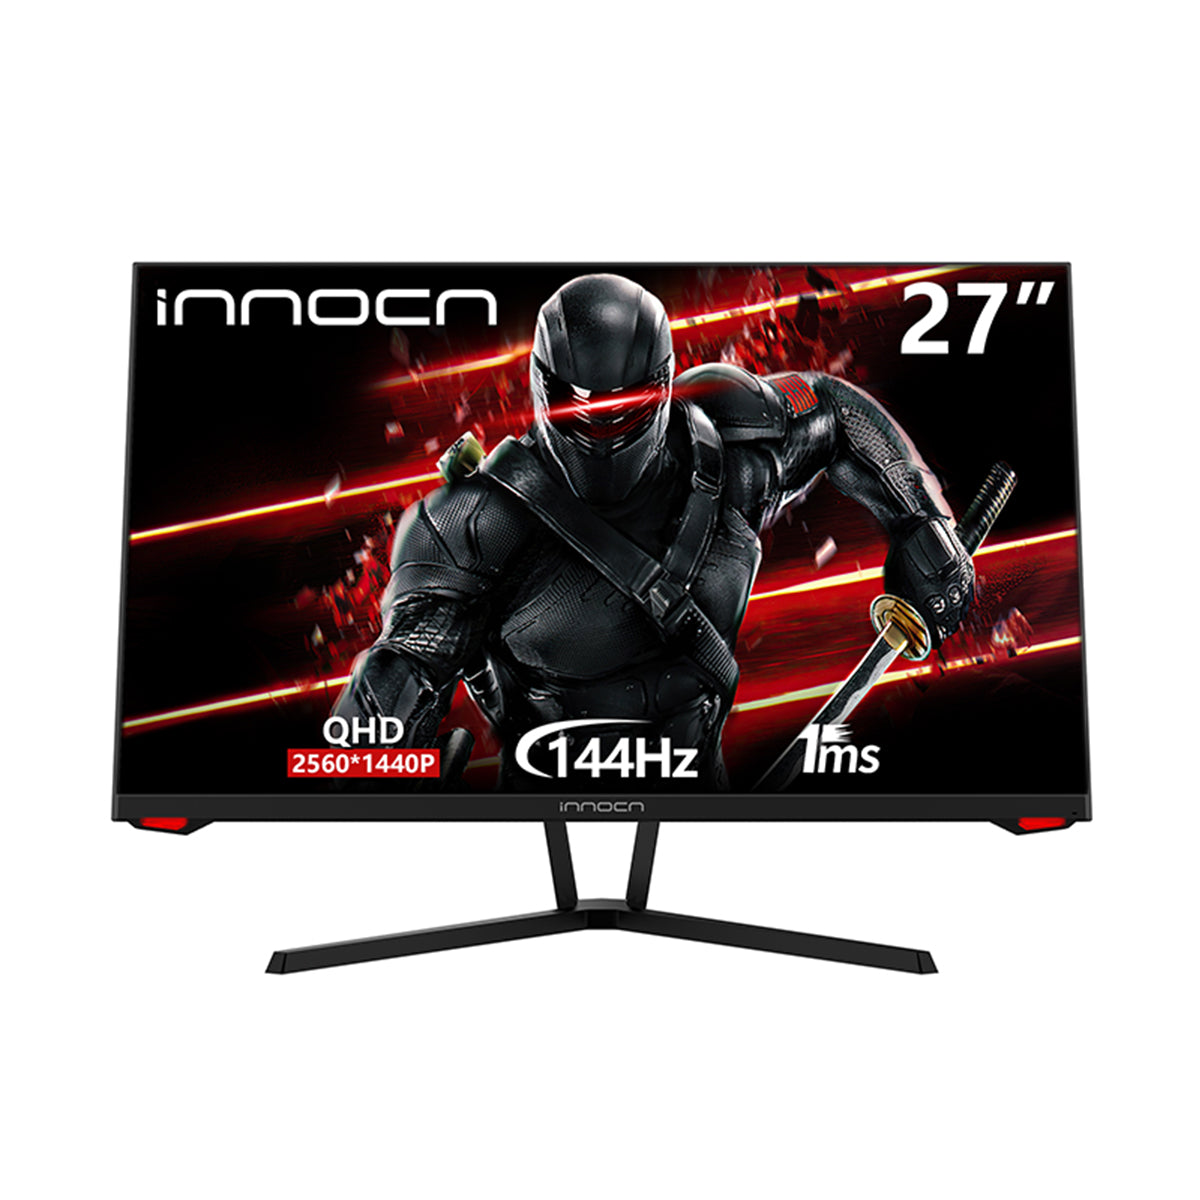 144 Hz Monitors: Shop 144 Hz Gaming Monitor Options